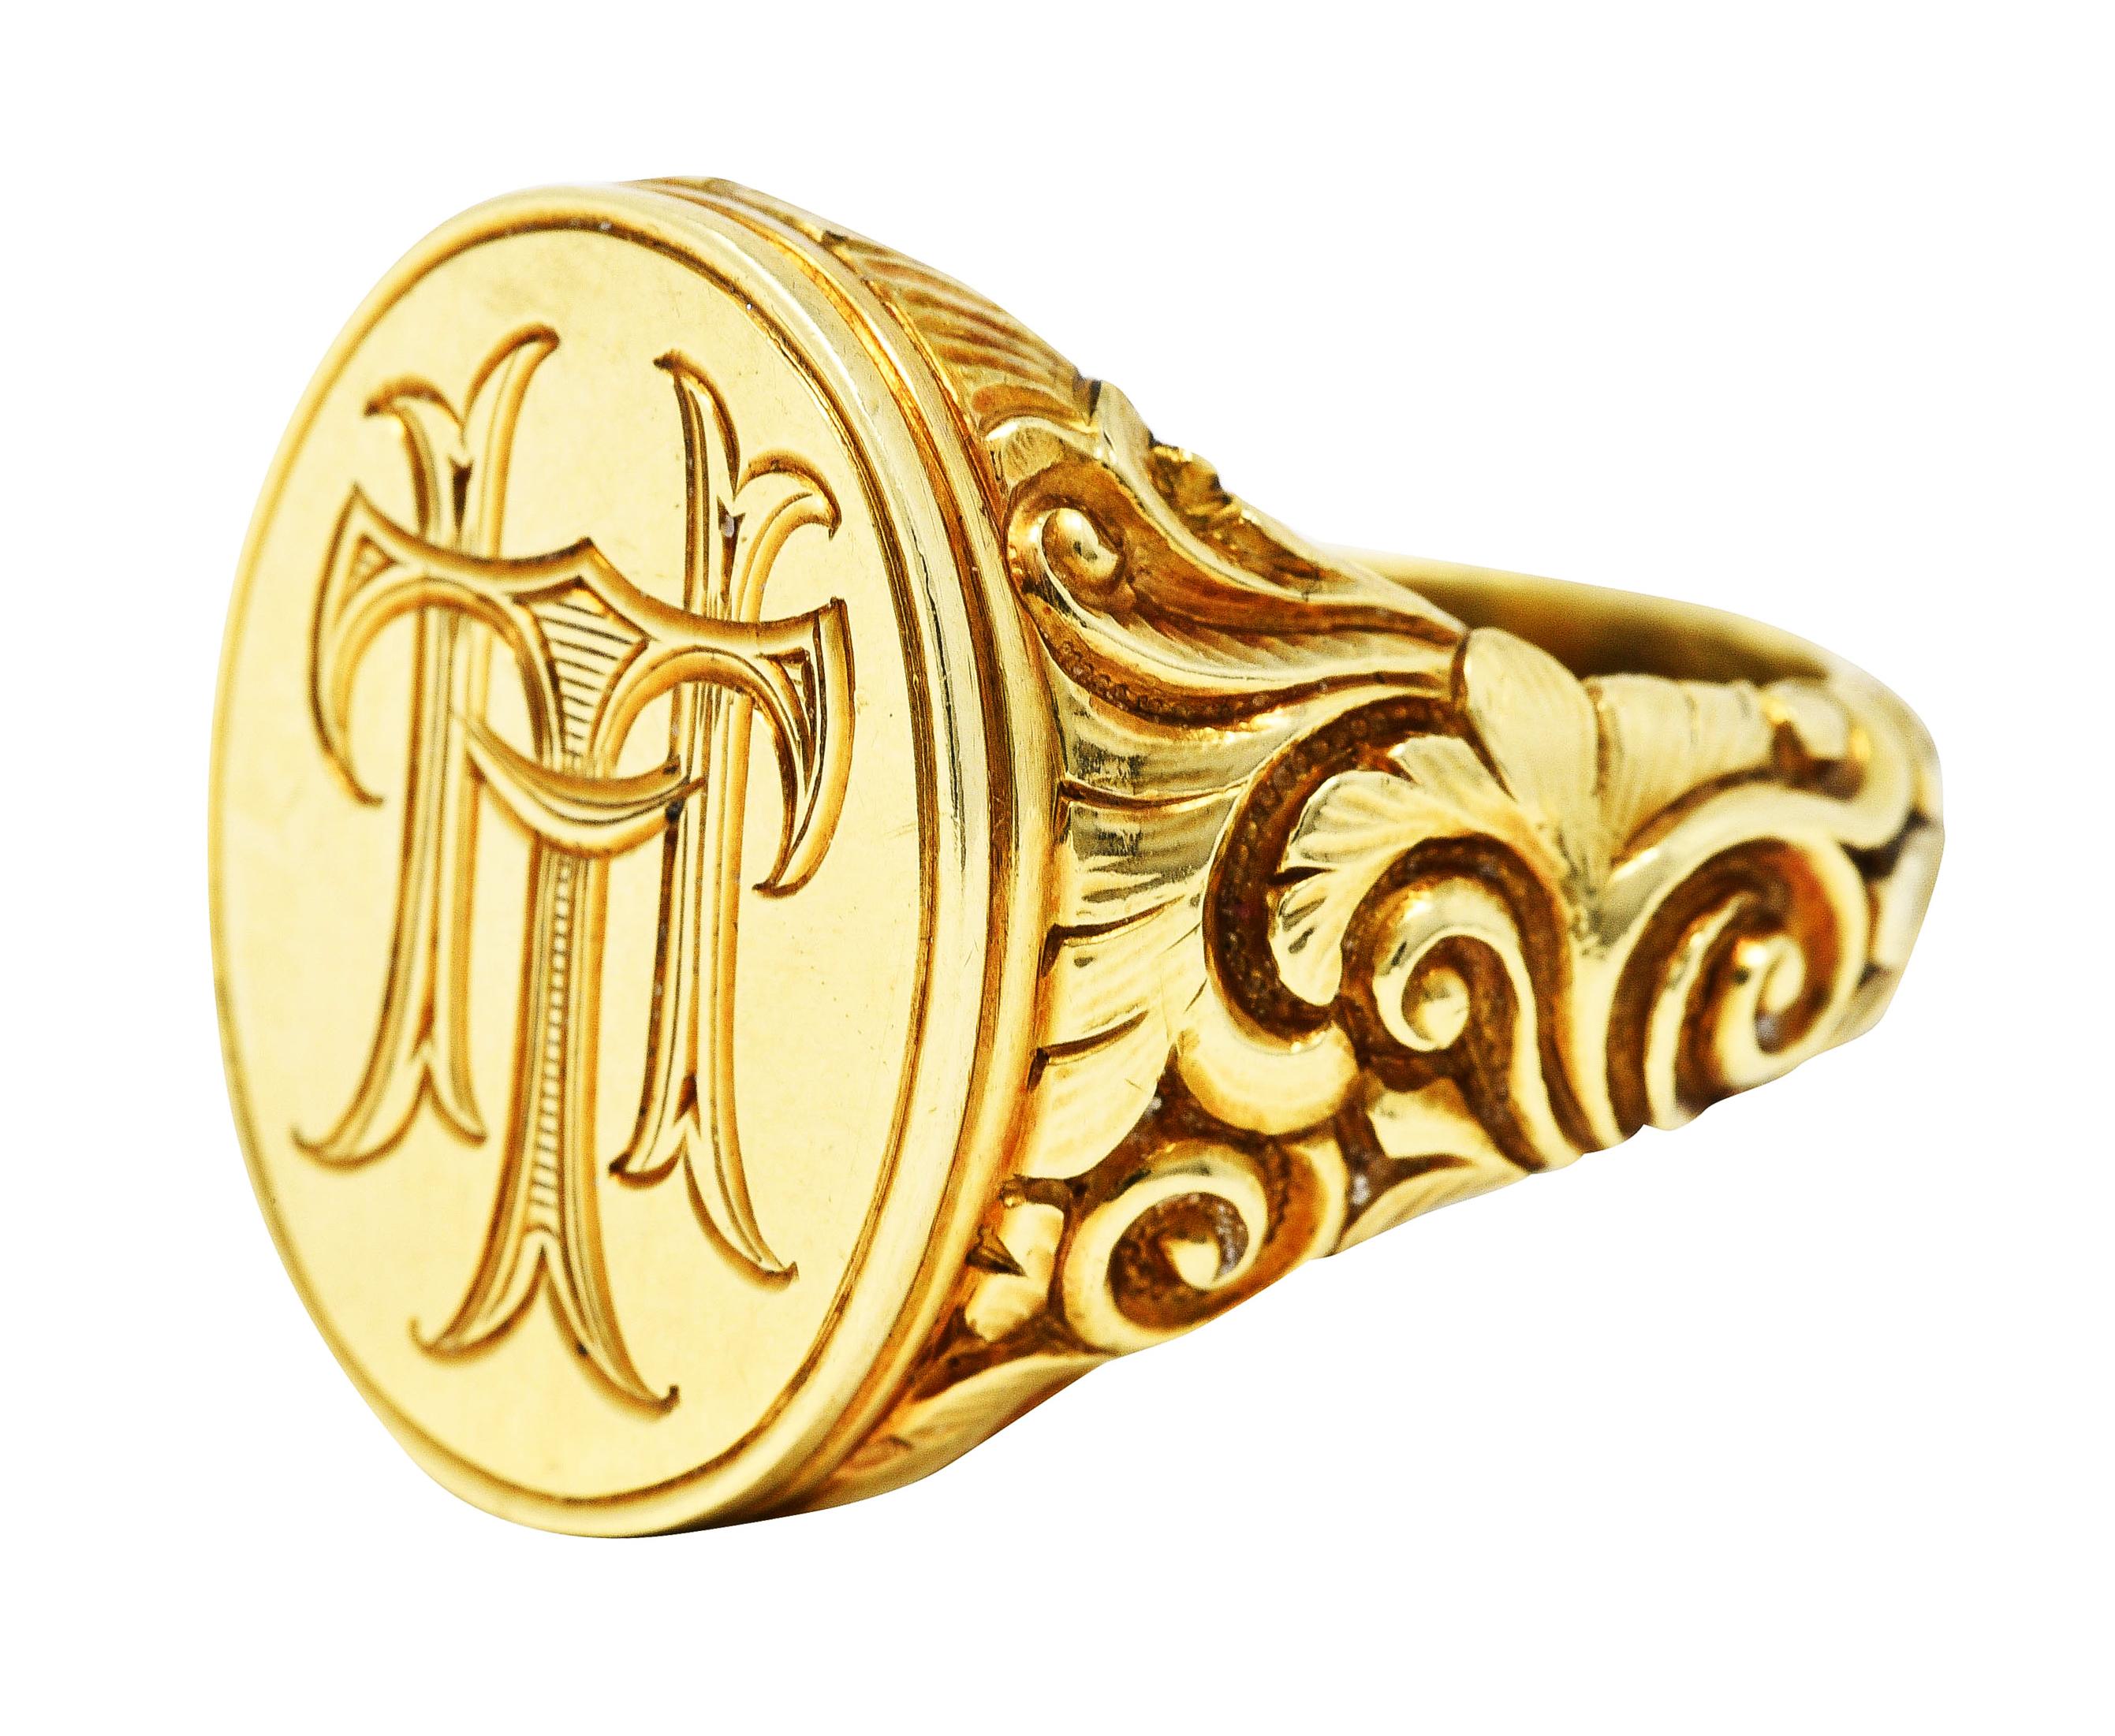 Art Deco Scofield & Co. Art Nouveau 14 Karat Yellow Gold Scrolling Unisex Signet Ring